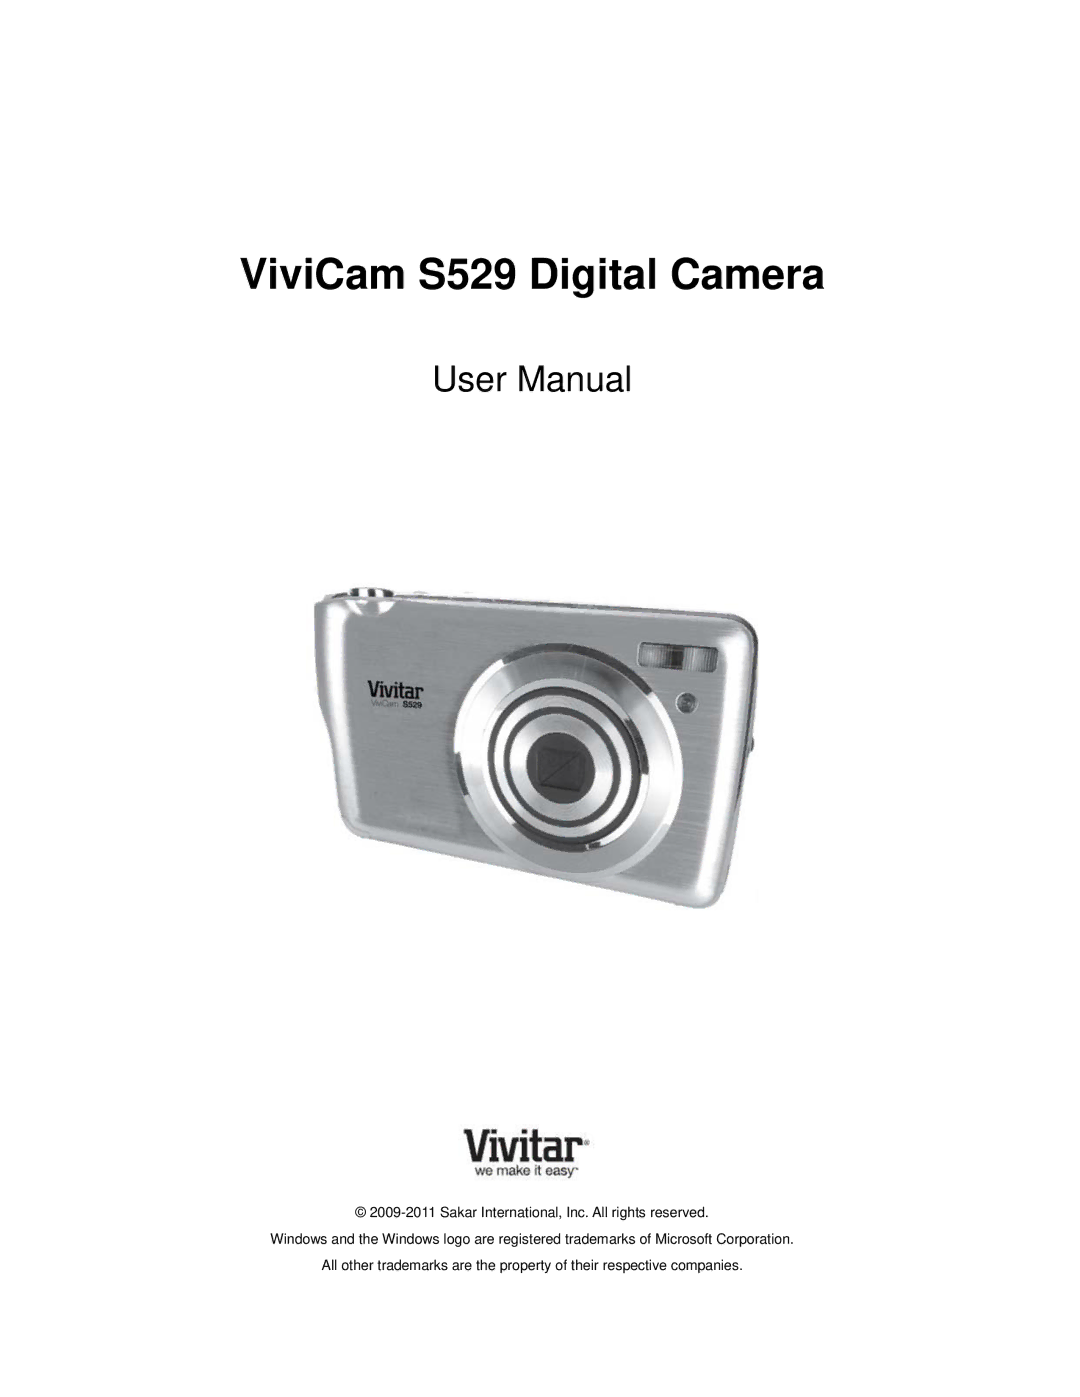 Vivitar user manual ViviCam S529 Digital Camera 